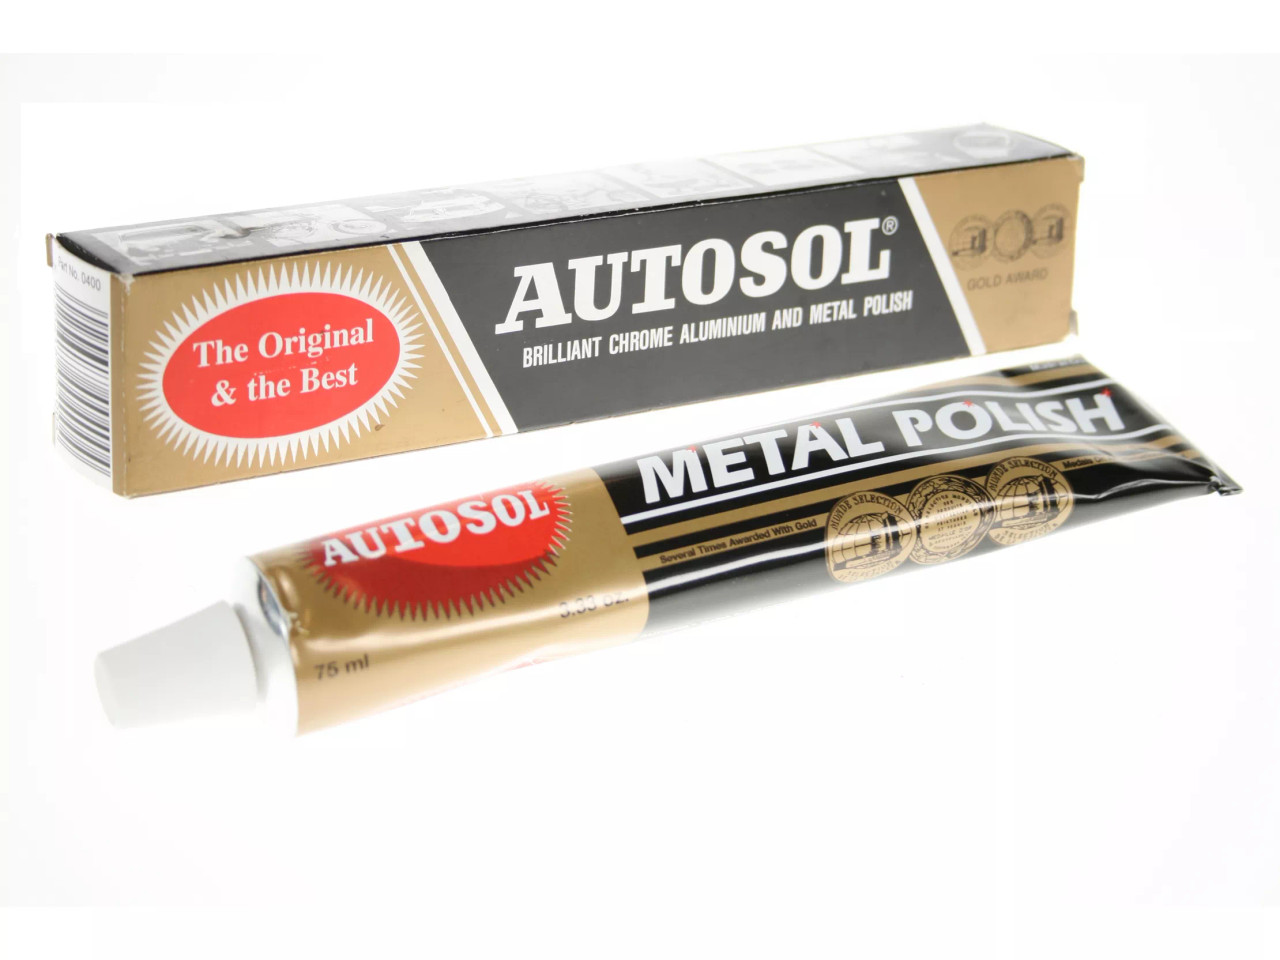 Autosol Multi-Purpose Metal Polish - 75ml [0400]